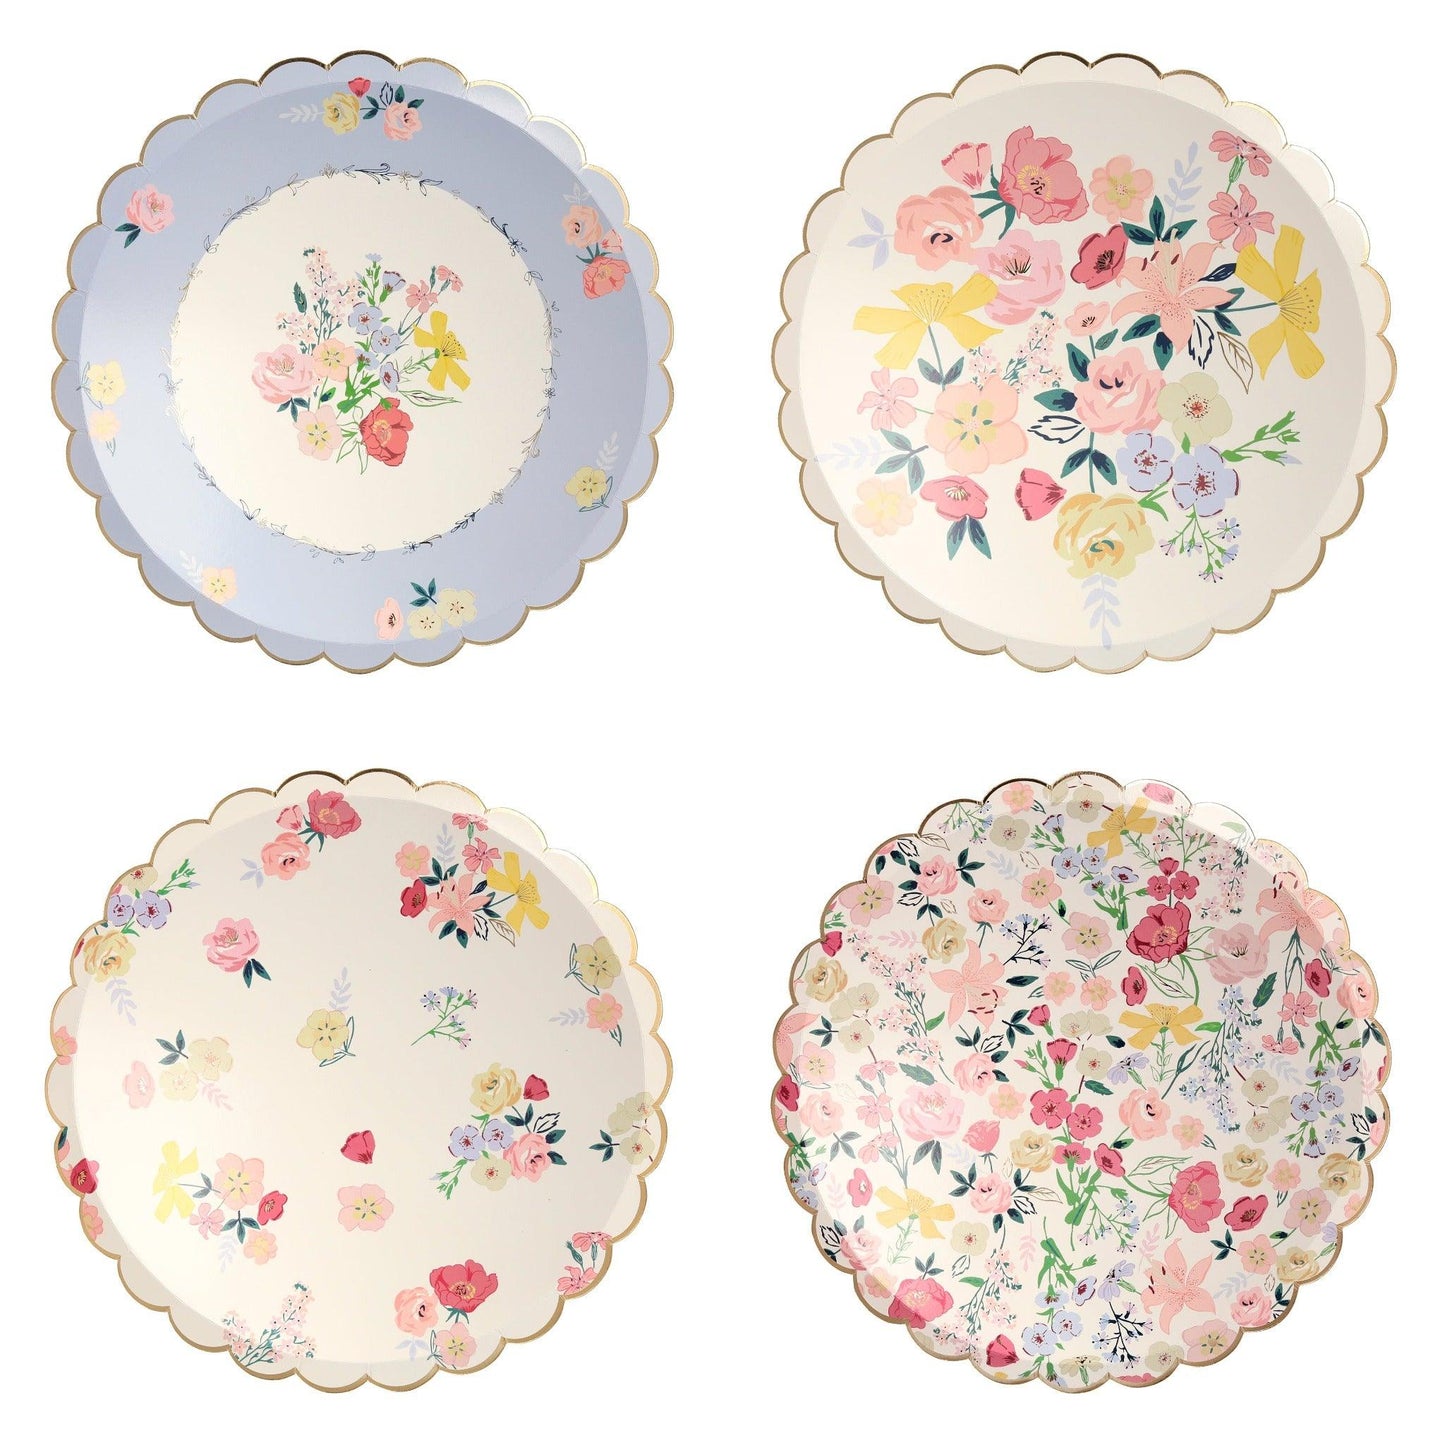 Meri Meri English garden dinner plates in soft lilac, pink, lemon and green floral patterns. 